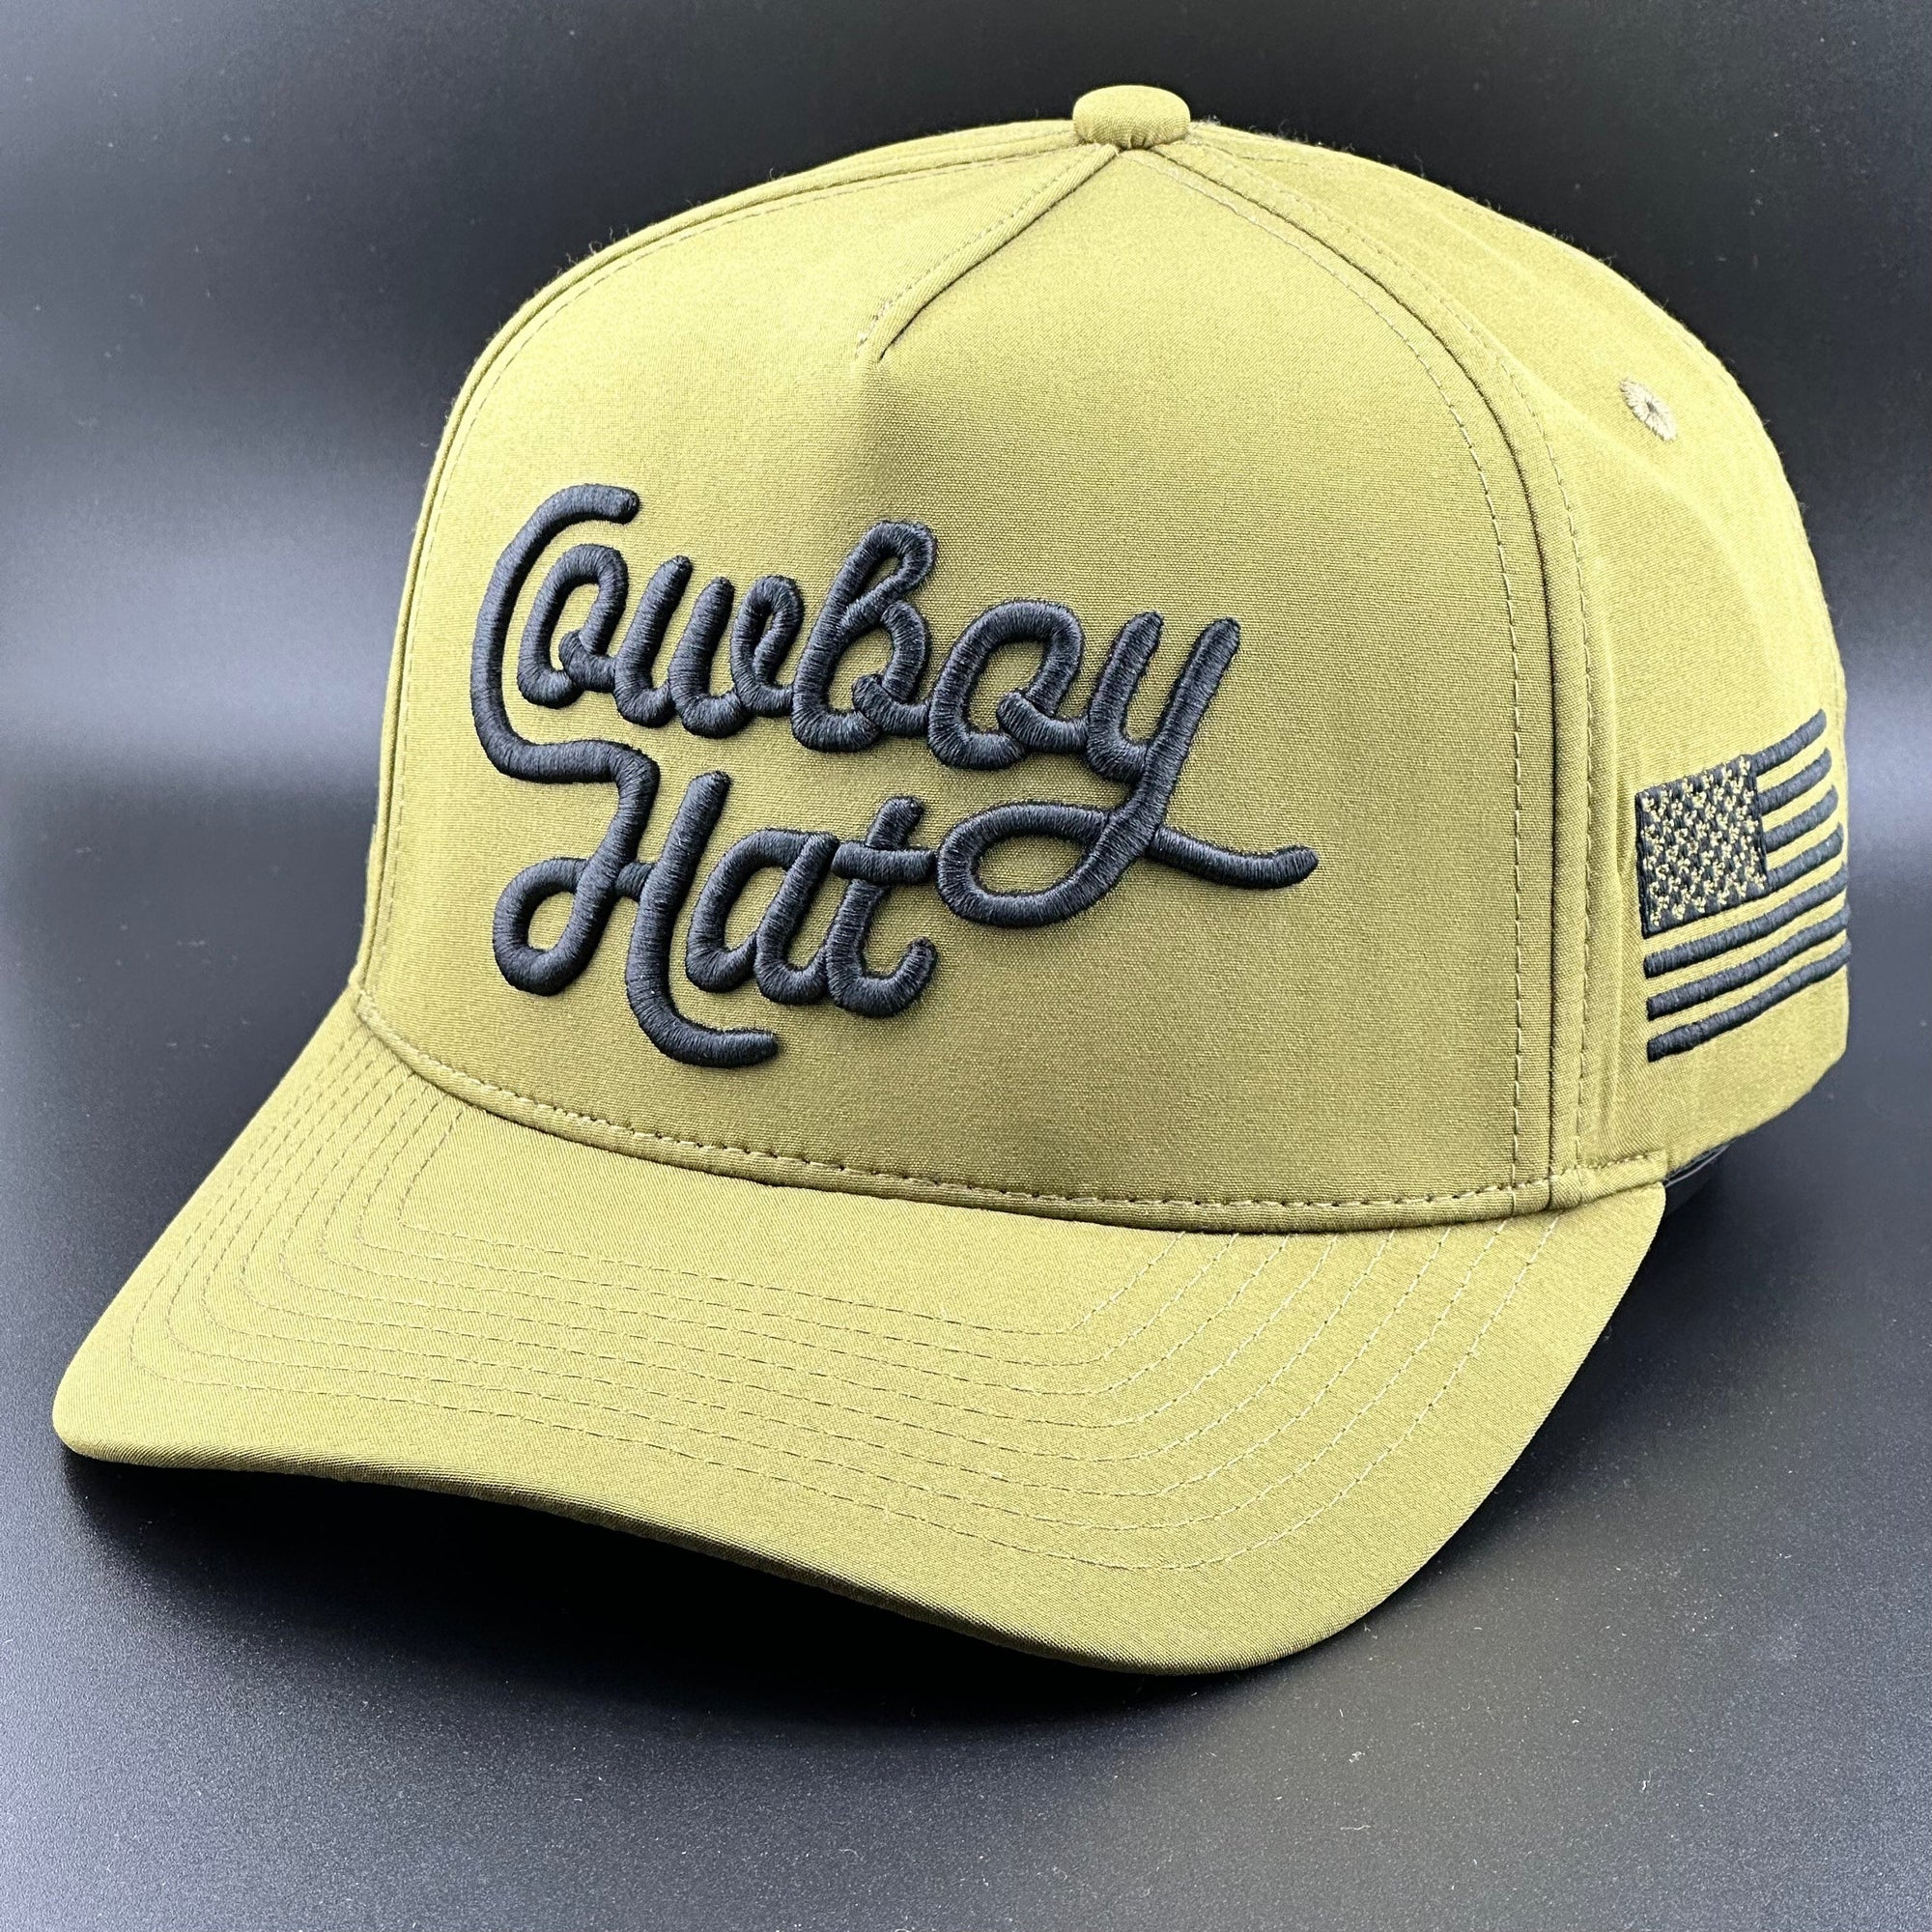 Cowboy Revolution Apparel Co. Hats One Size Fits Most The Veteran “Cowboy Hat” - Cowboy Revolution 5-panel Hat